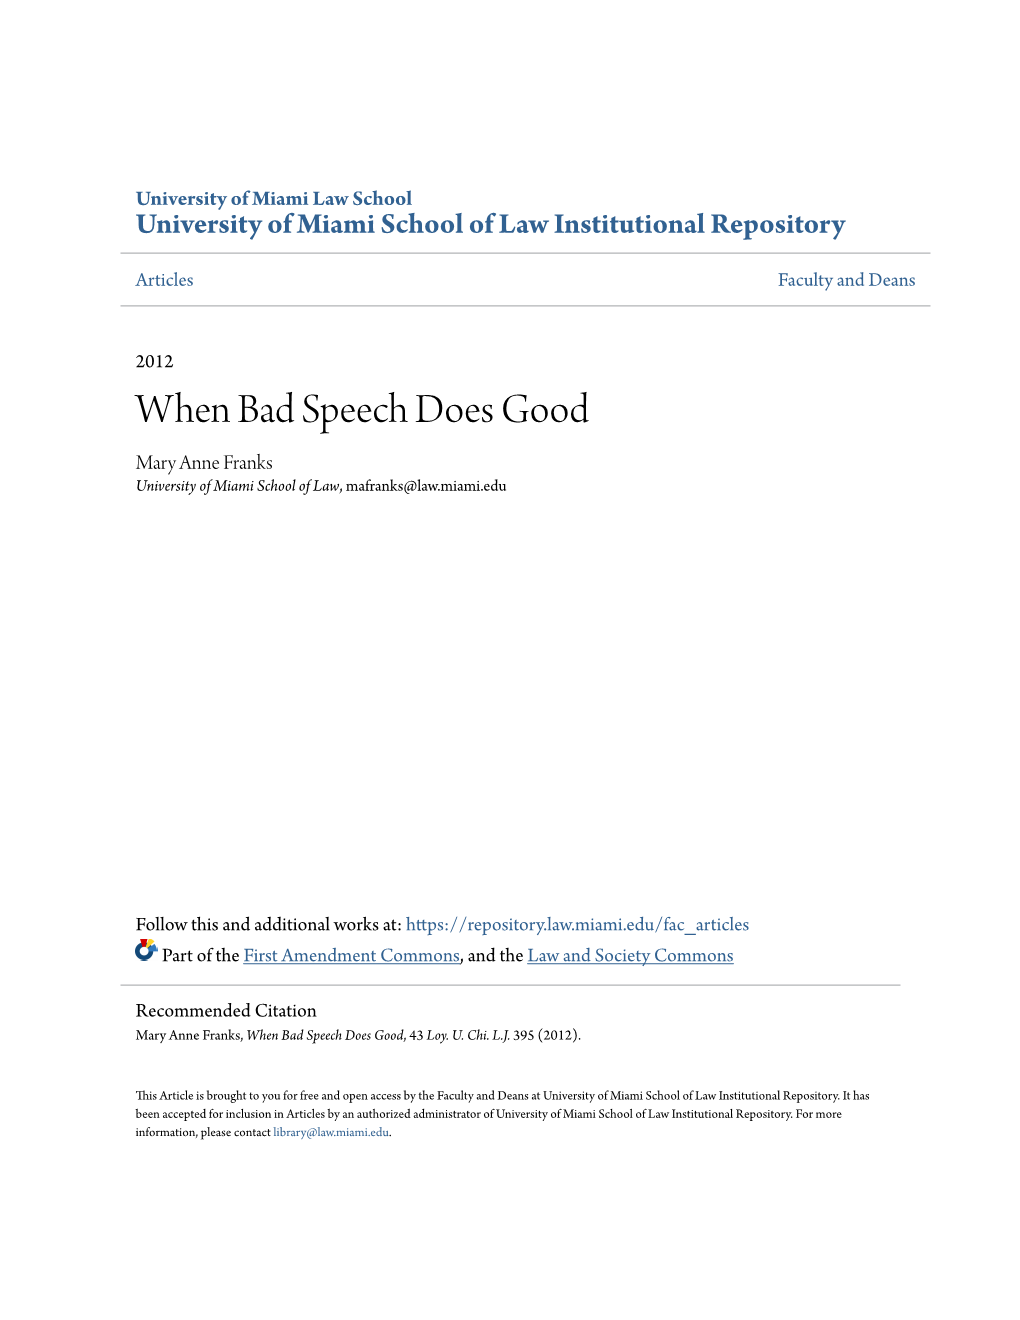 When Bad Speech Does Good Mary Anne Franks University of Miami School of Law, Mafranks@Law.Miami.Edu